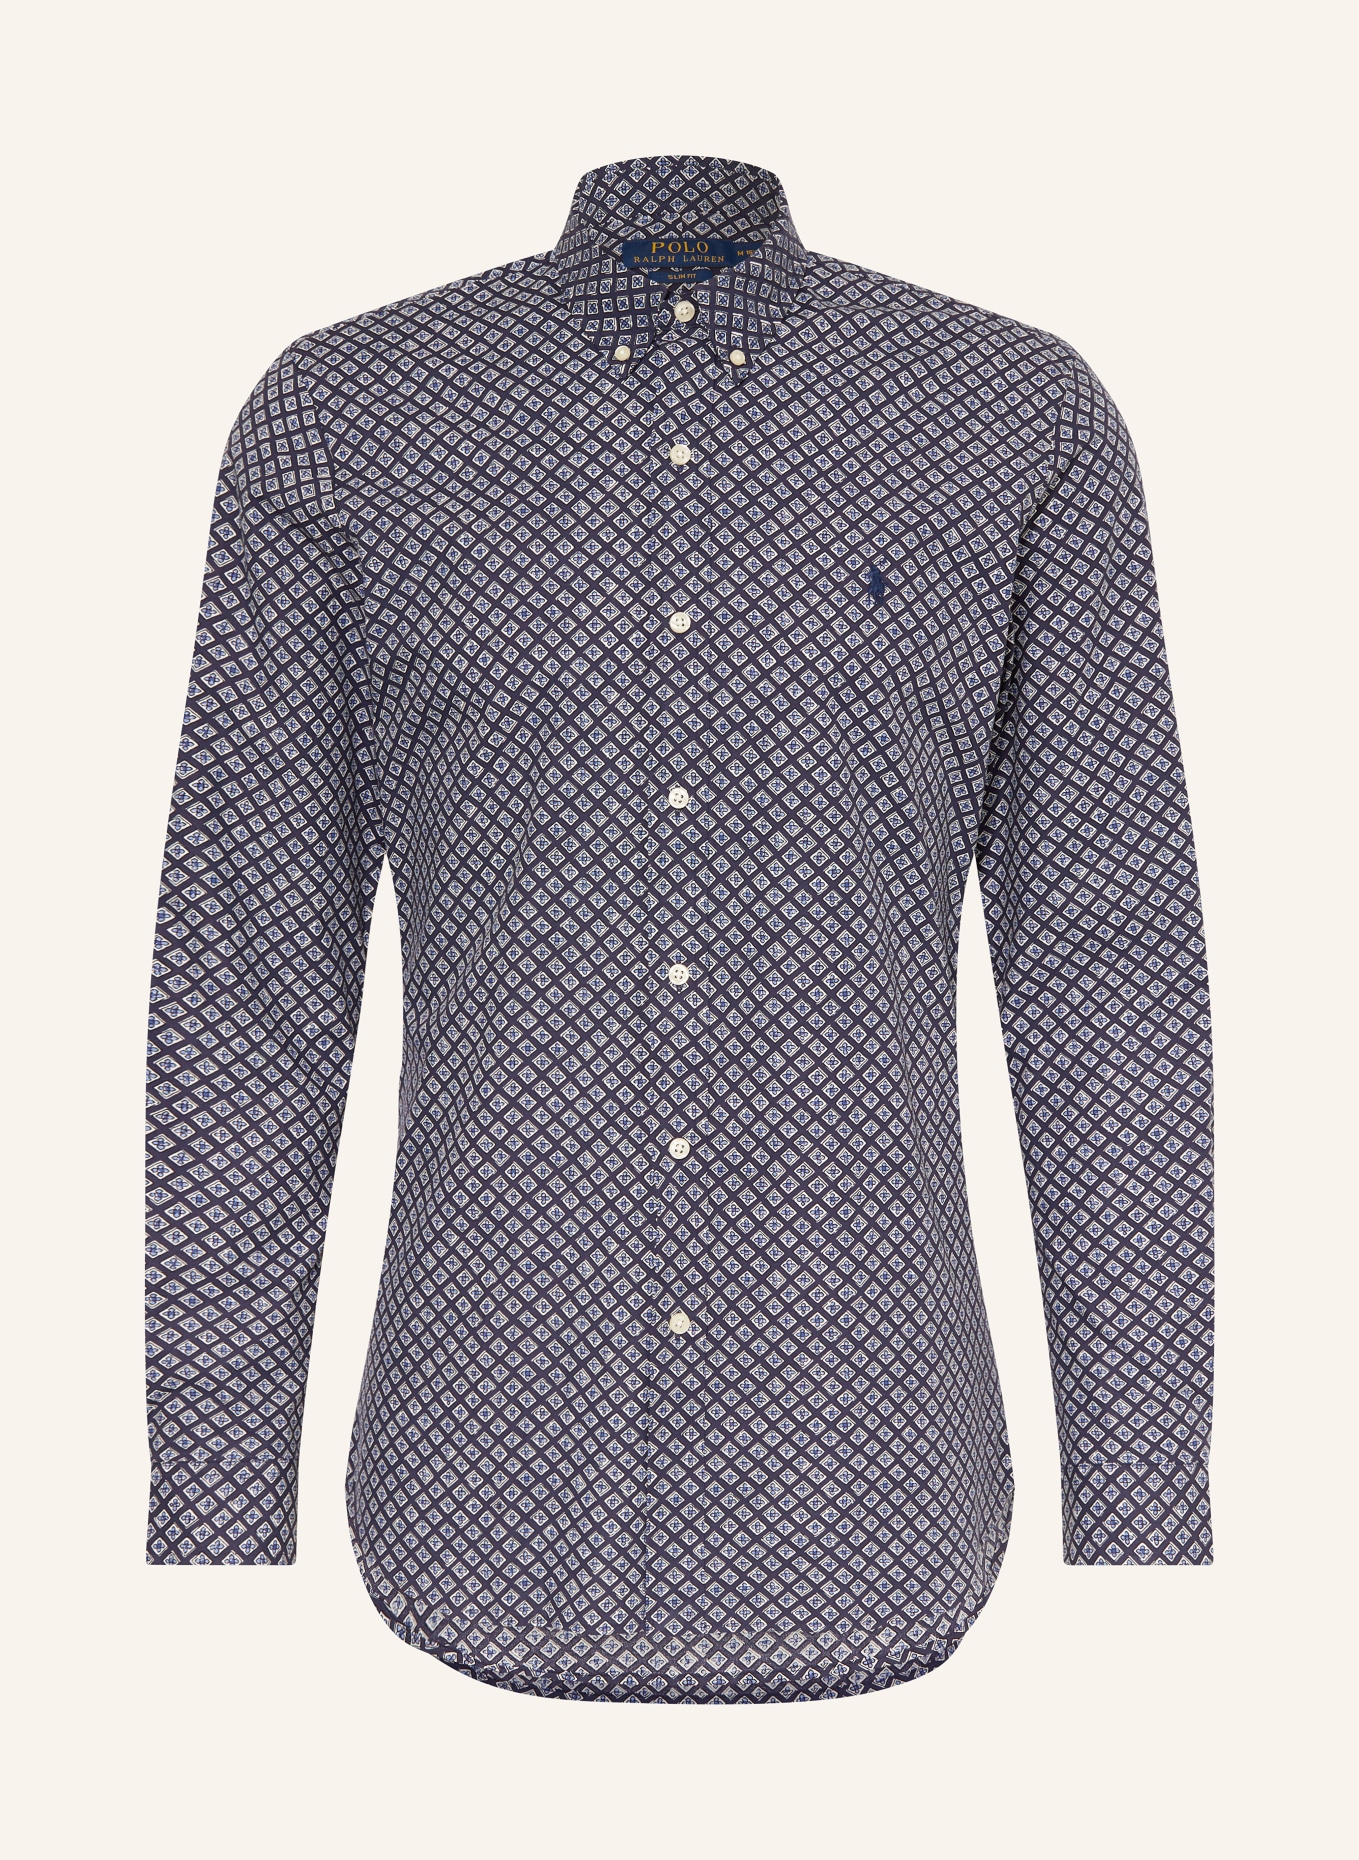 POLO RALPH LAUREN Hemd Slim Fit, Farbe: DUNKELBLAU/ WEISS (Bild 1)